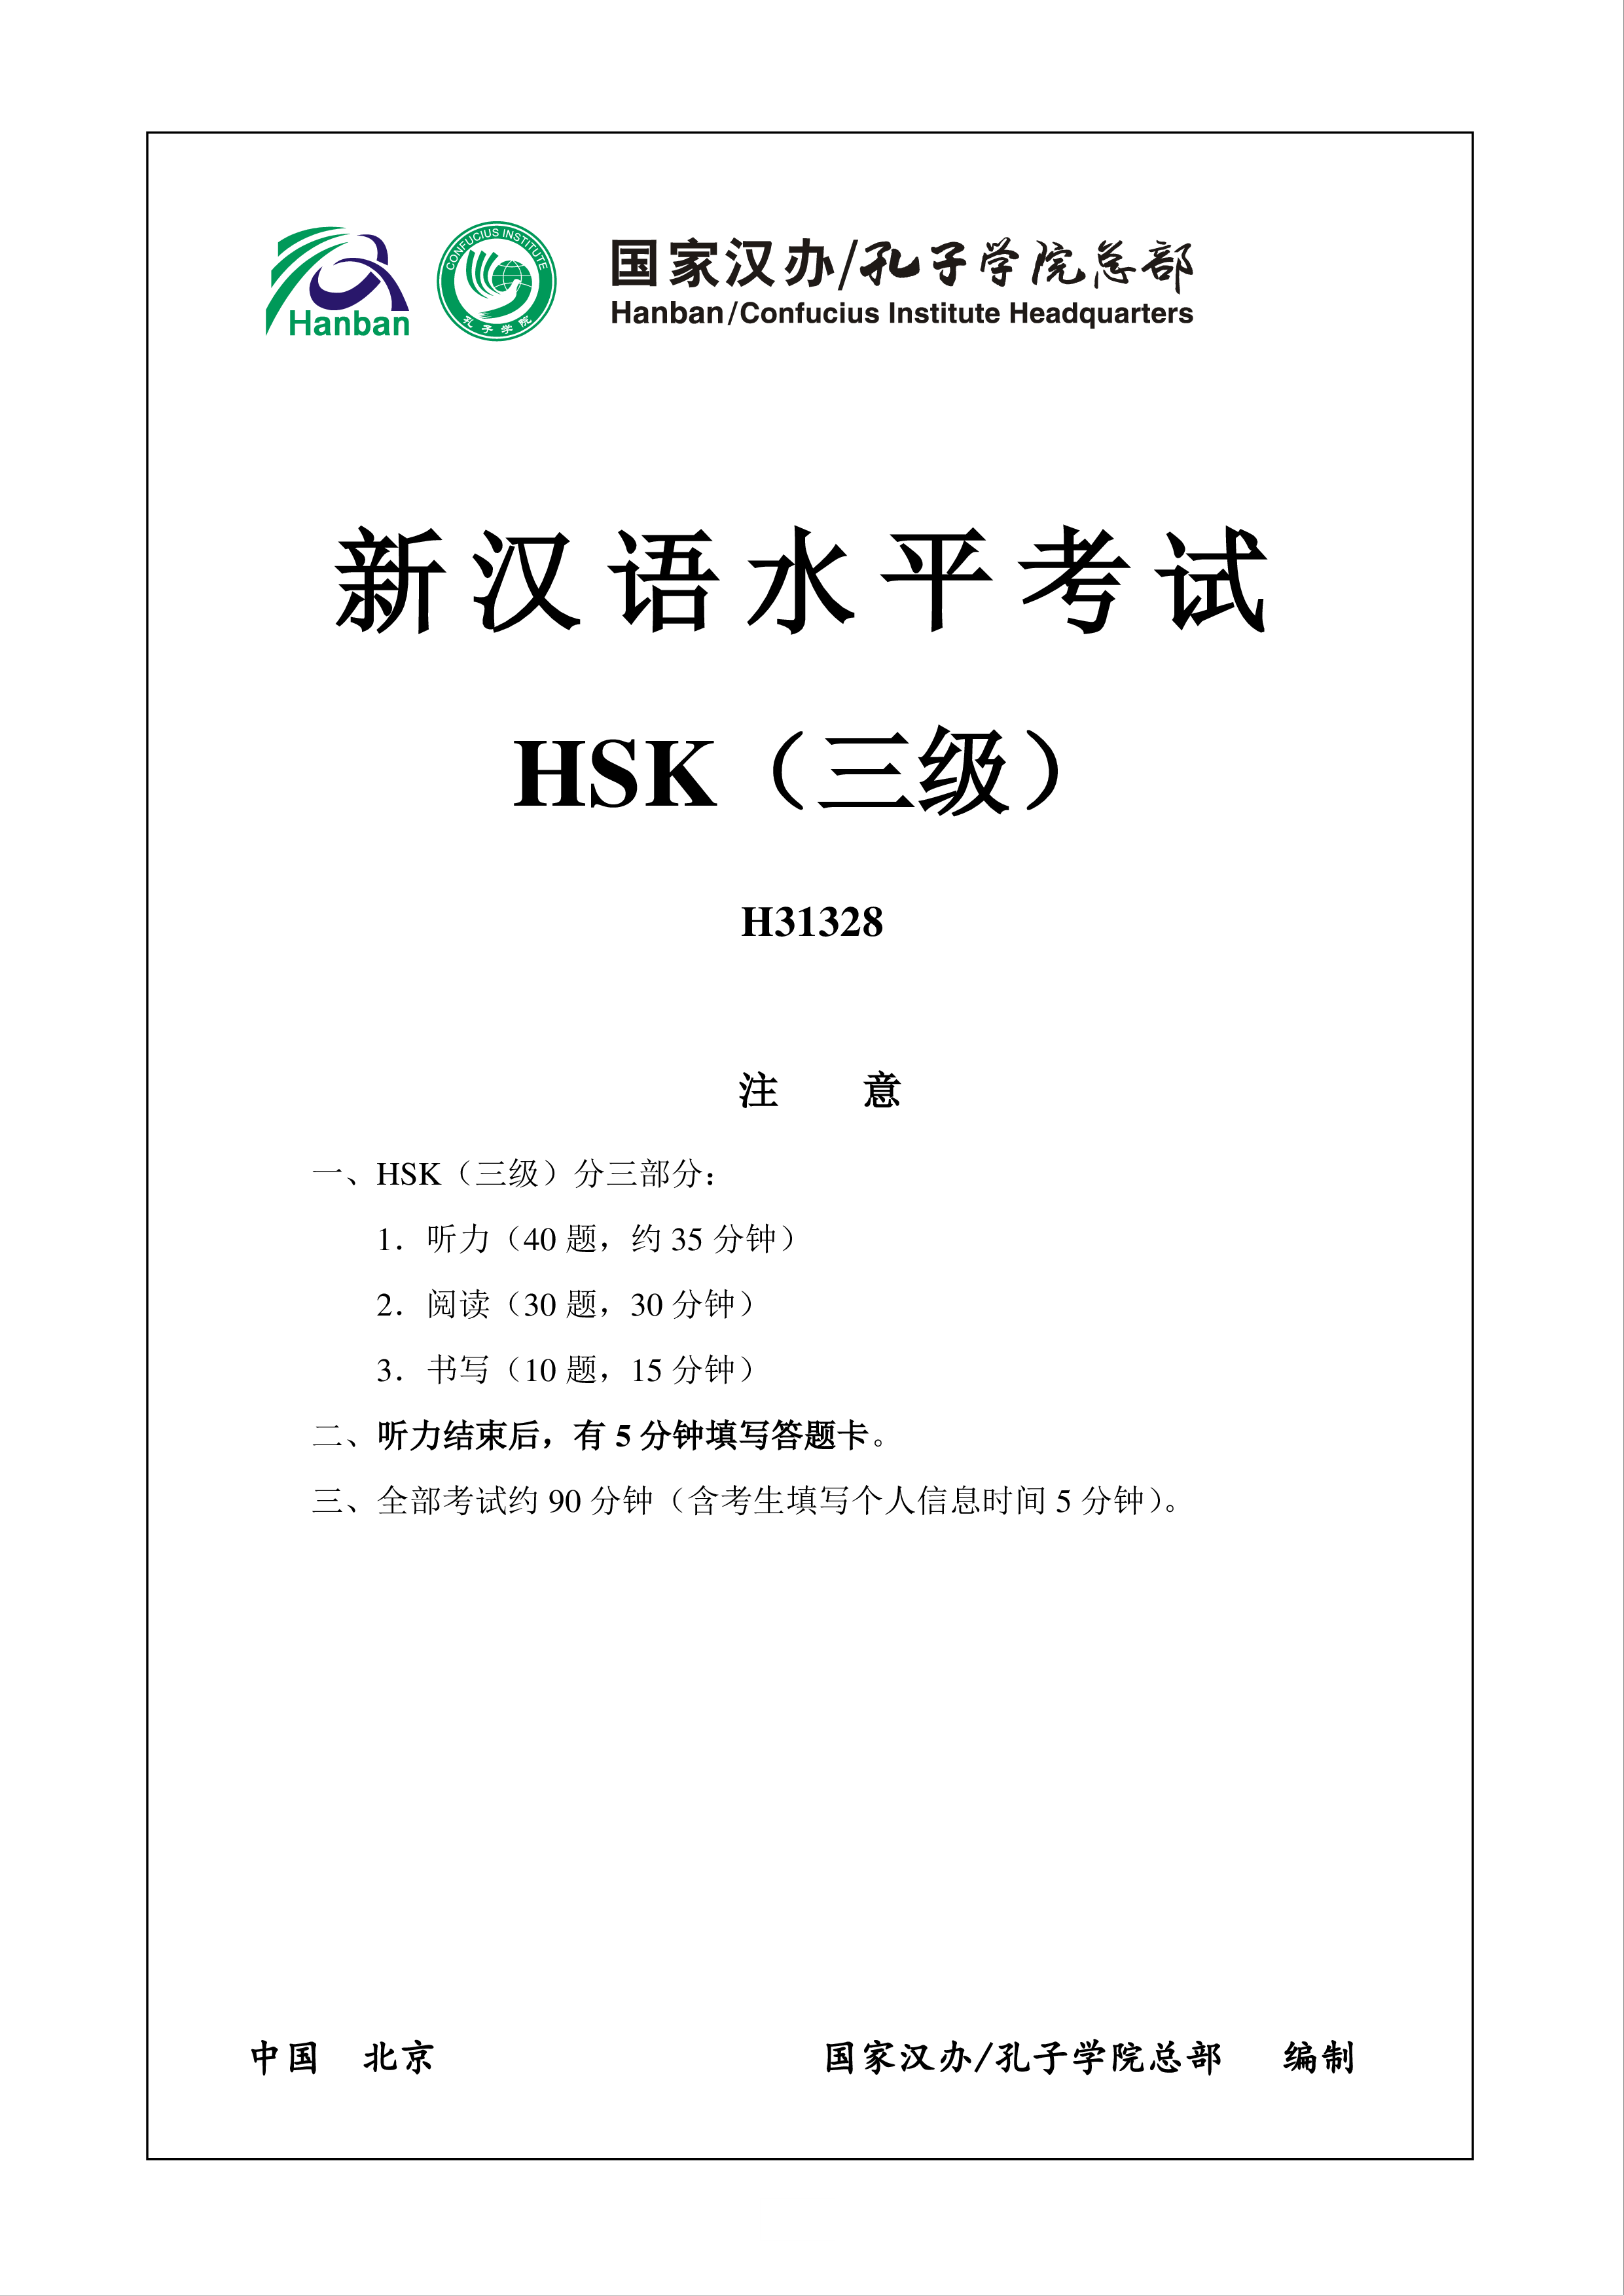 HSK3 H31328 Examen main image